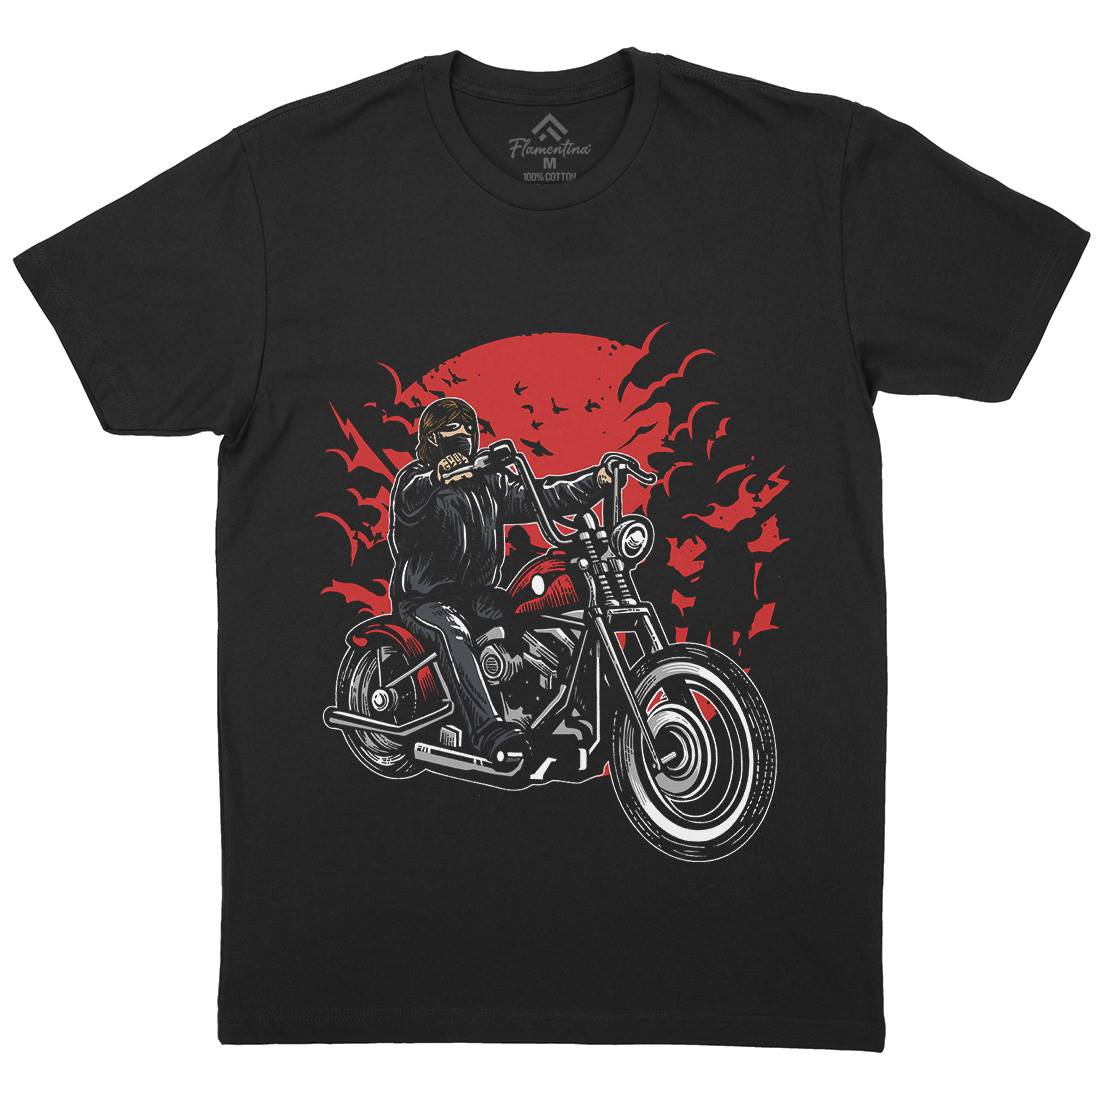 Zombie Slayer Mens Crew Neck T-Shirt Horror A598